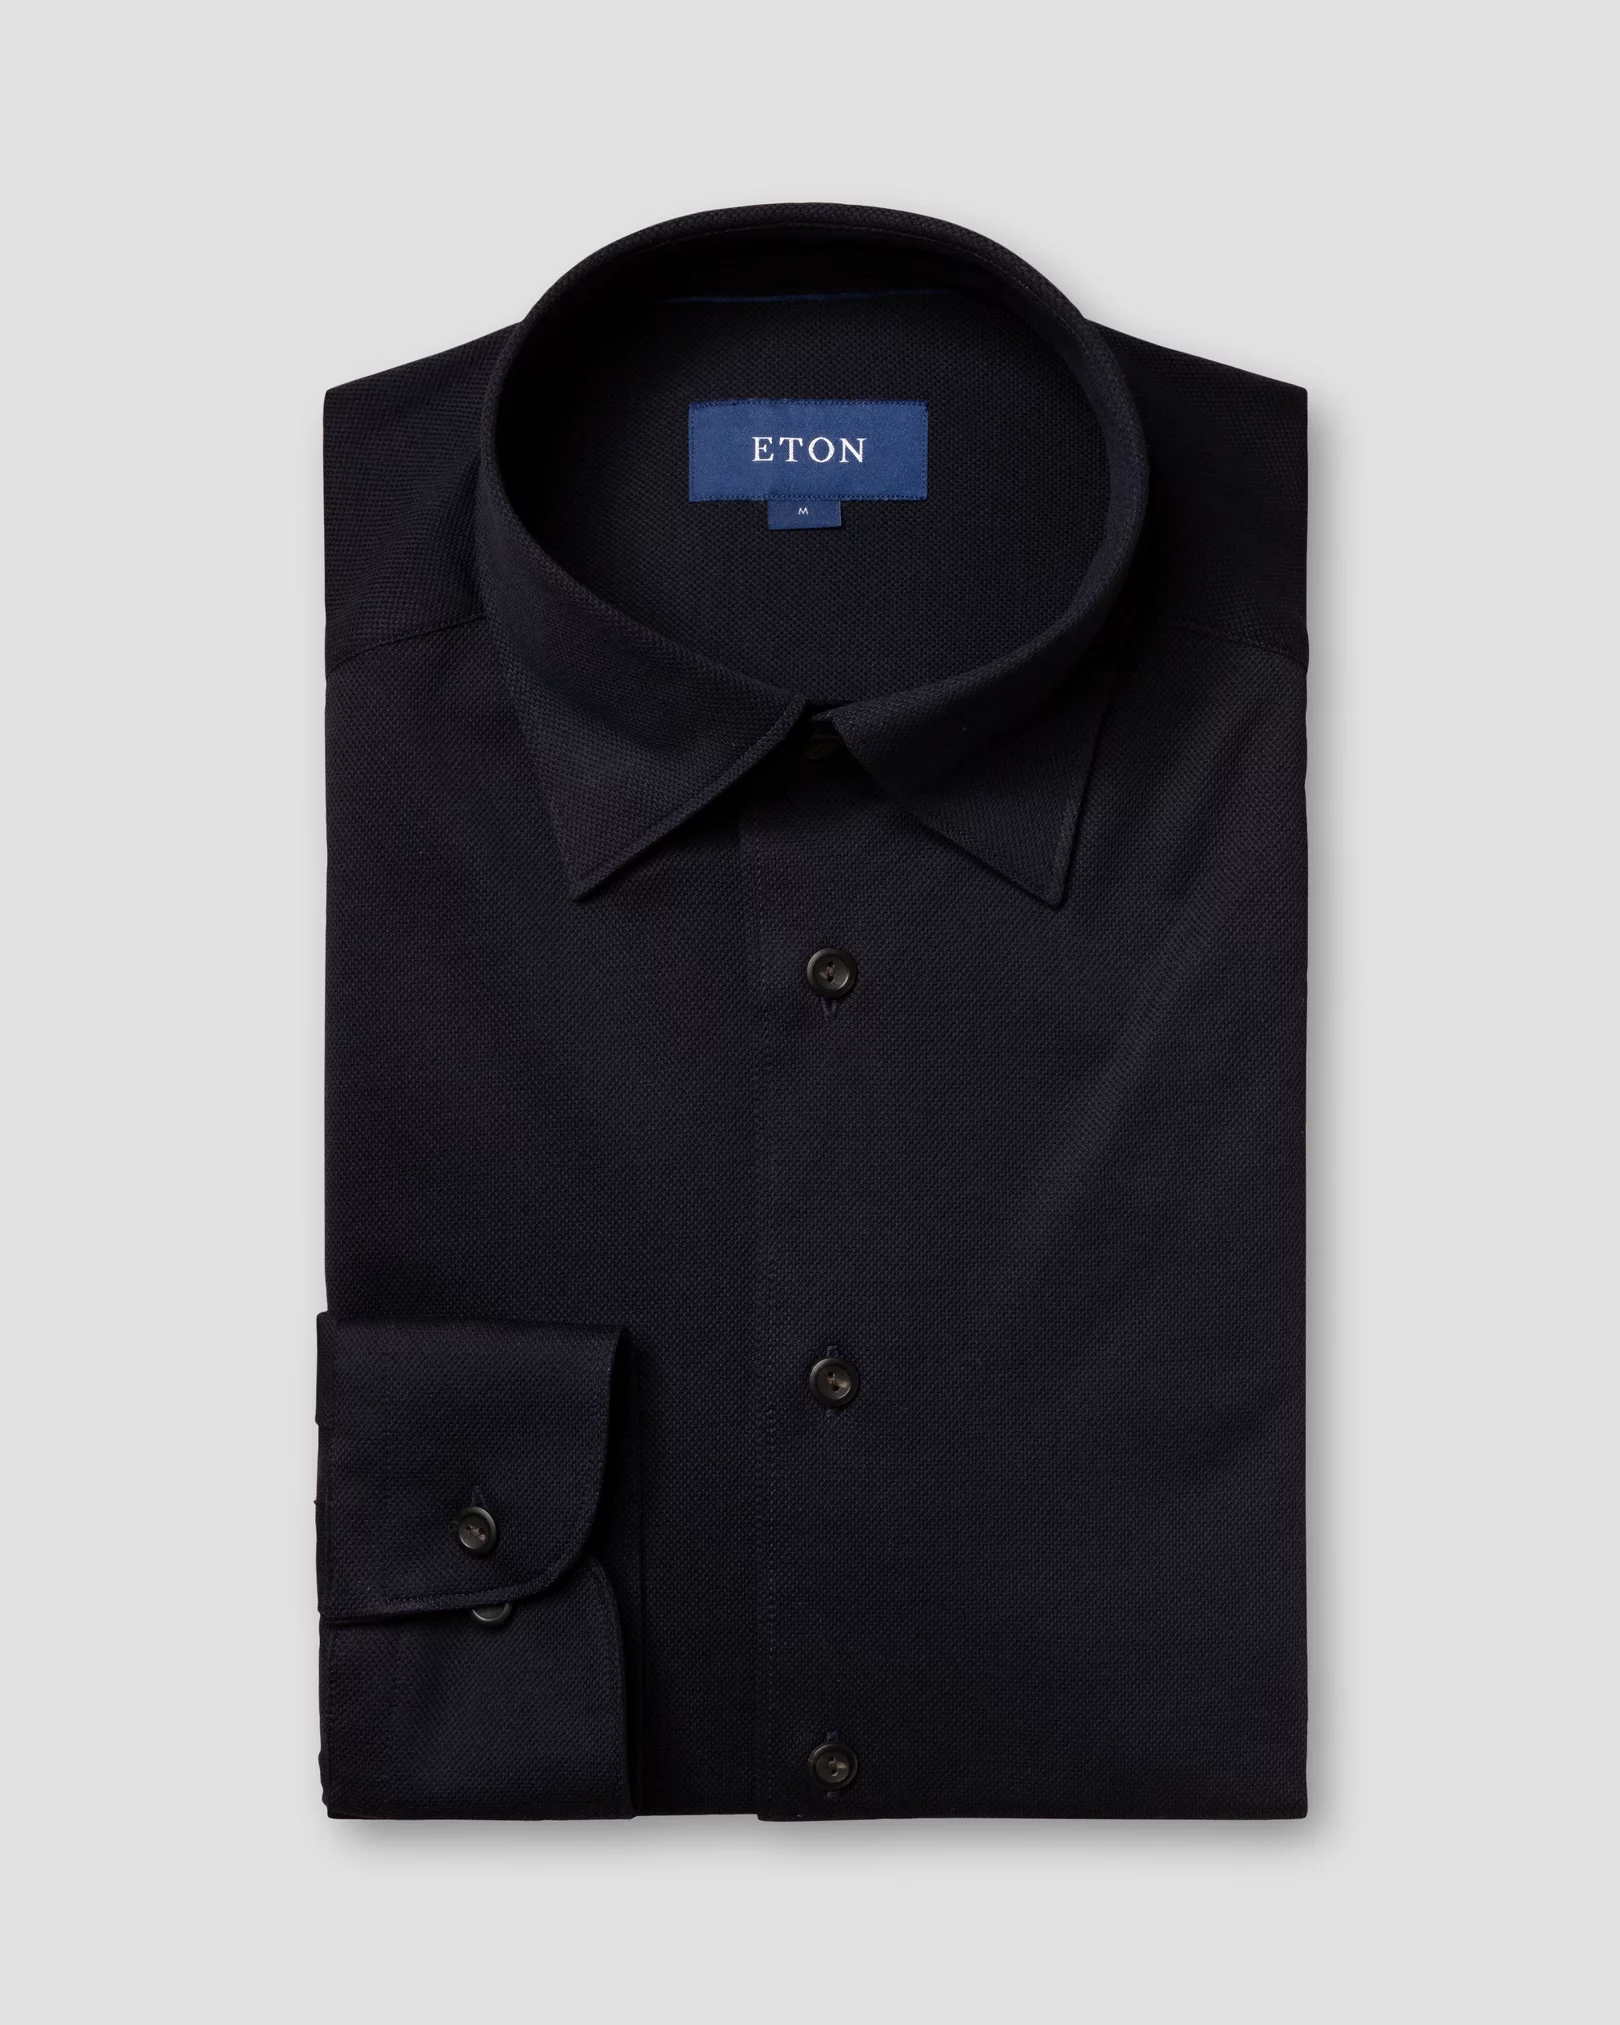 Eton - dark blue pique shirt long sleeved